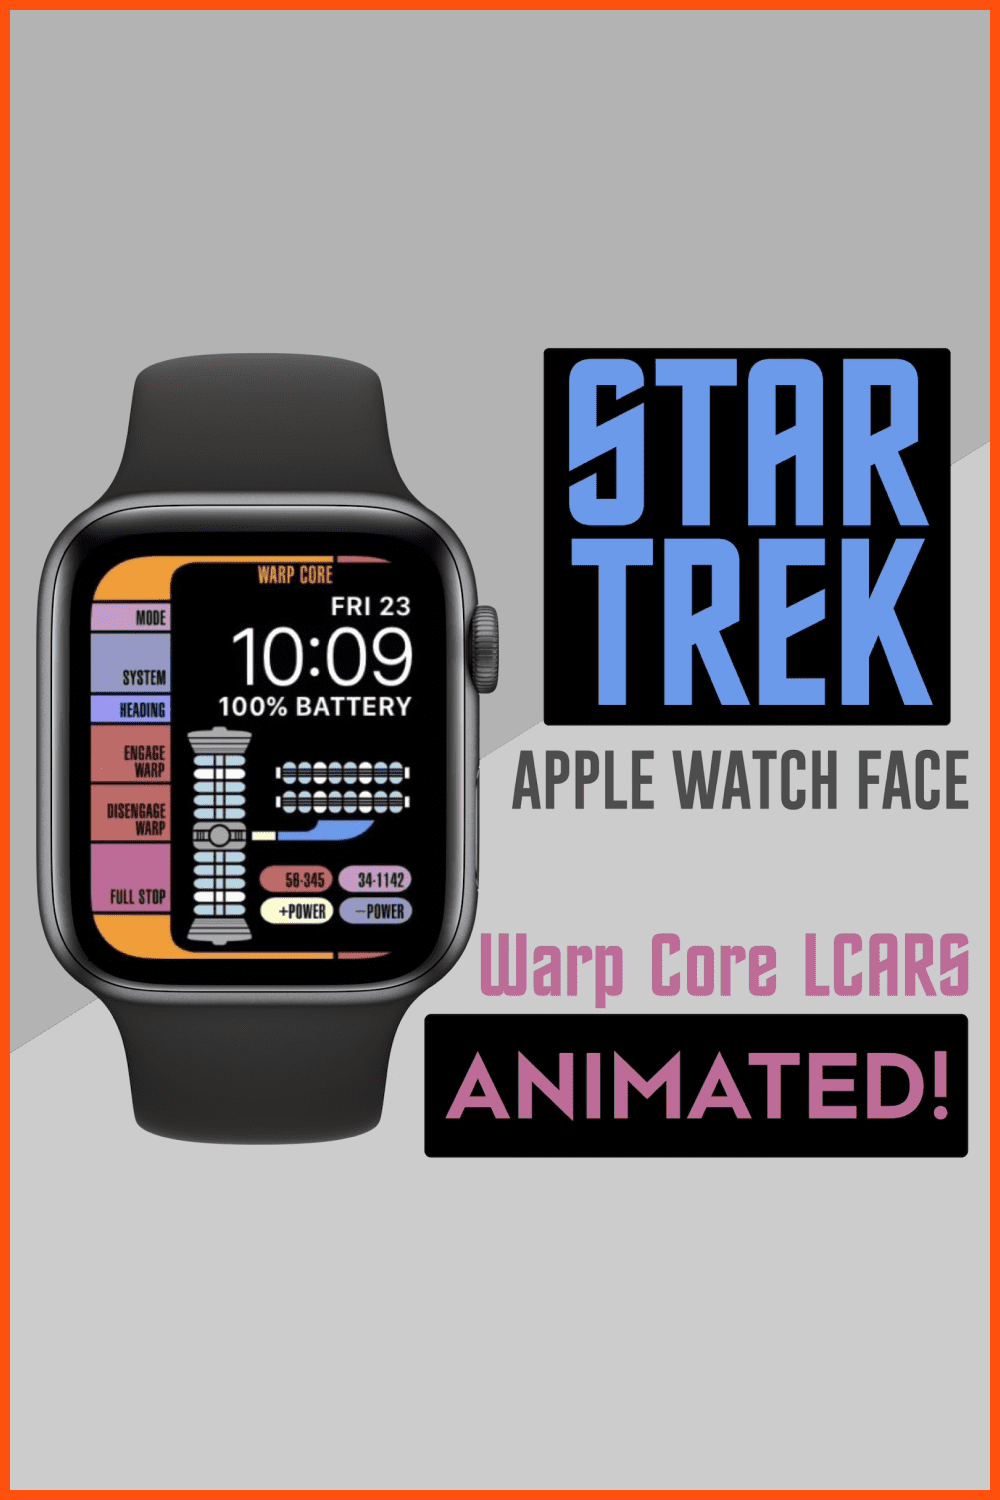 Apple watch with Star Trek fonts.